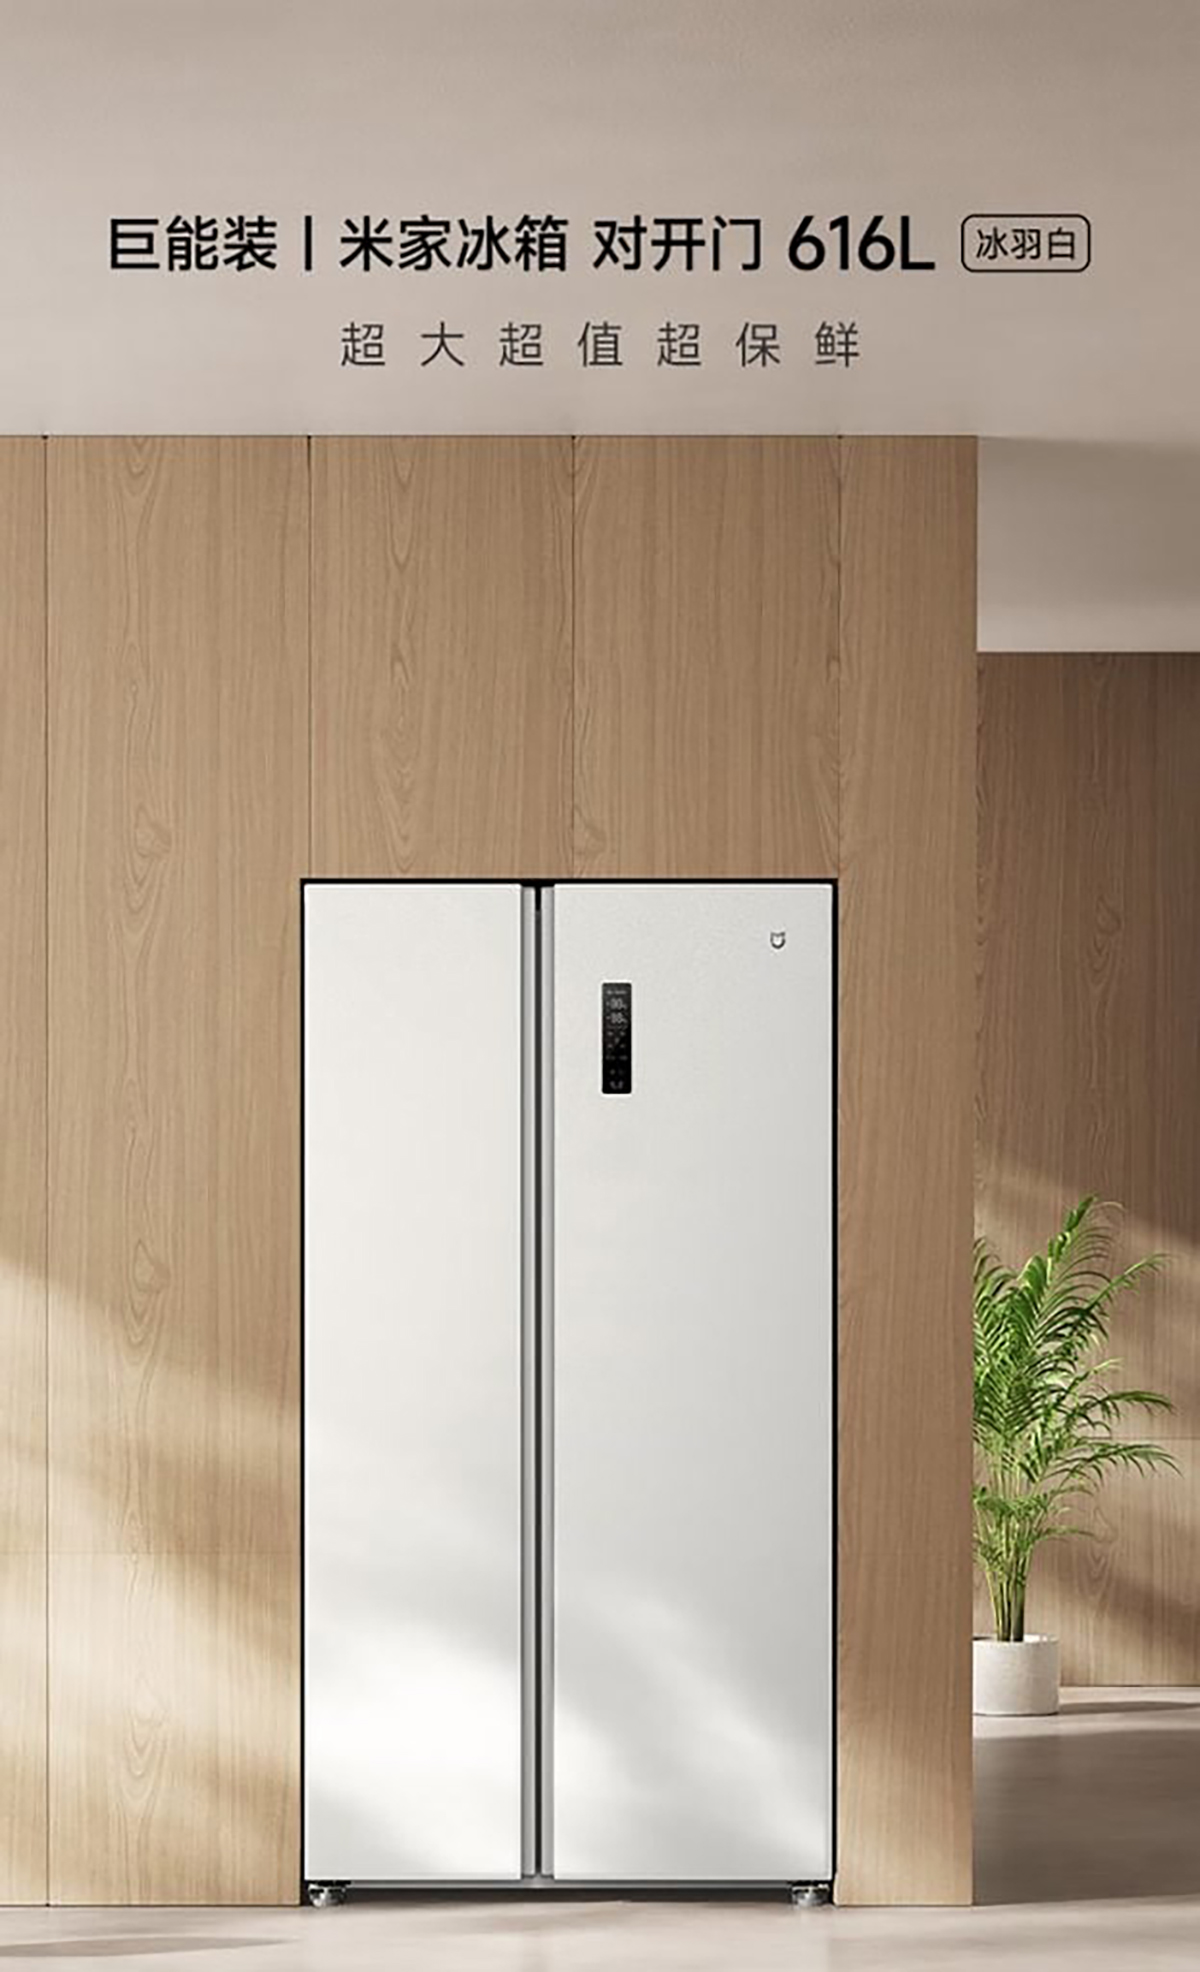 Xiaomi ra mắt tủ lạnh Mijia 616L French Door